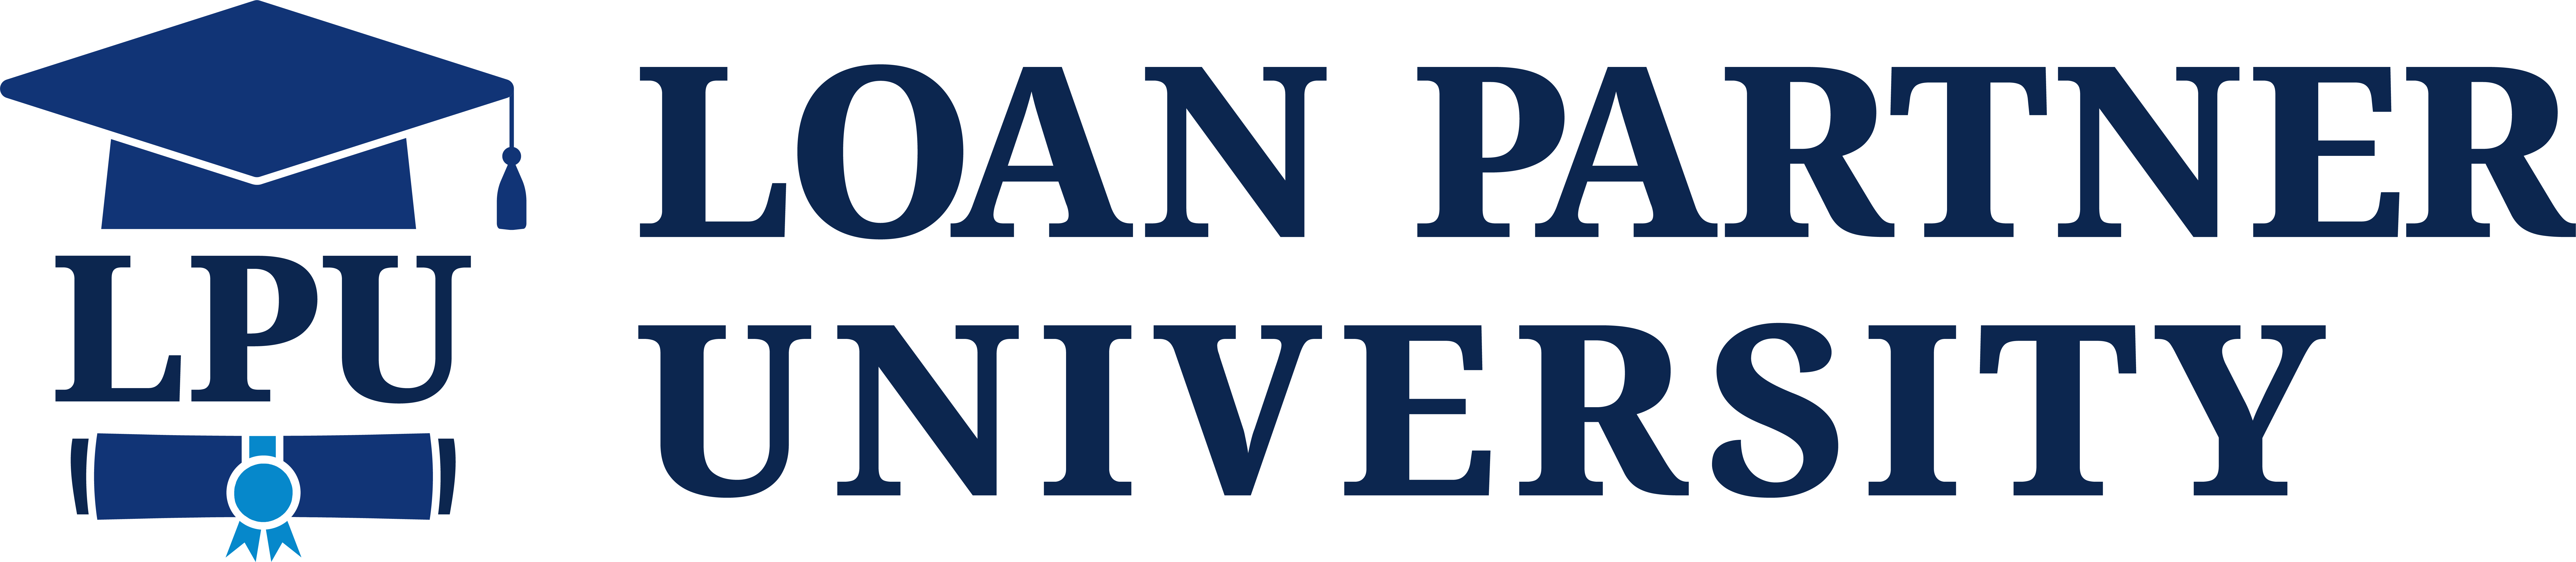 Loan Partner University